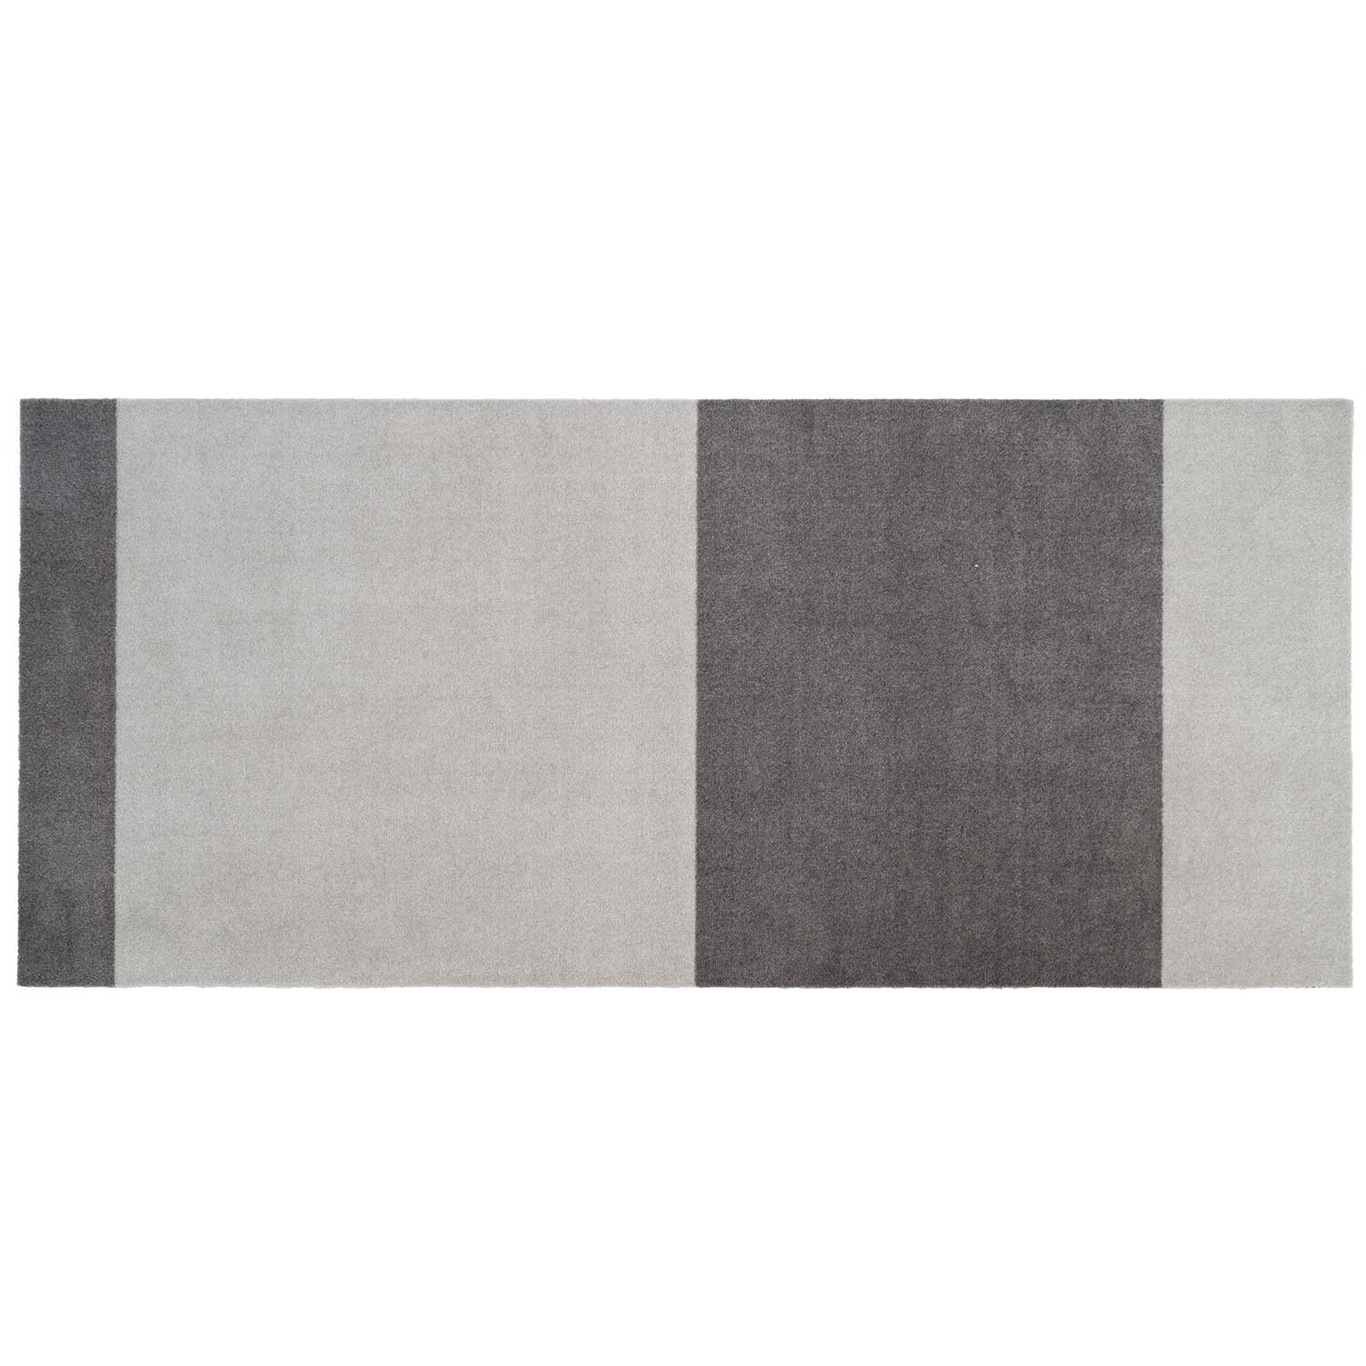 Stripes Matto Steel Grey / Vaaleanharmaa, 90x200 cm